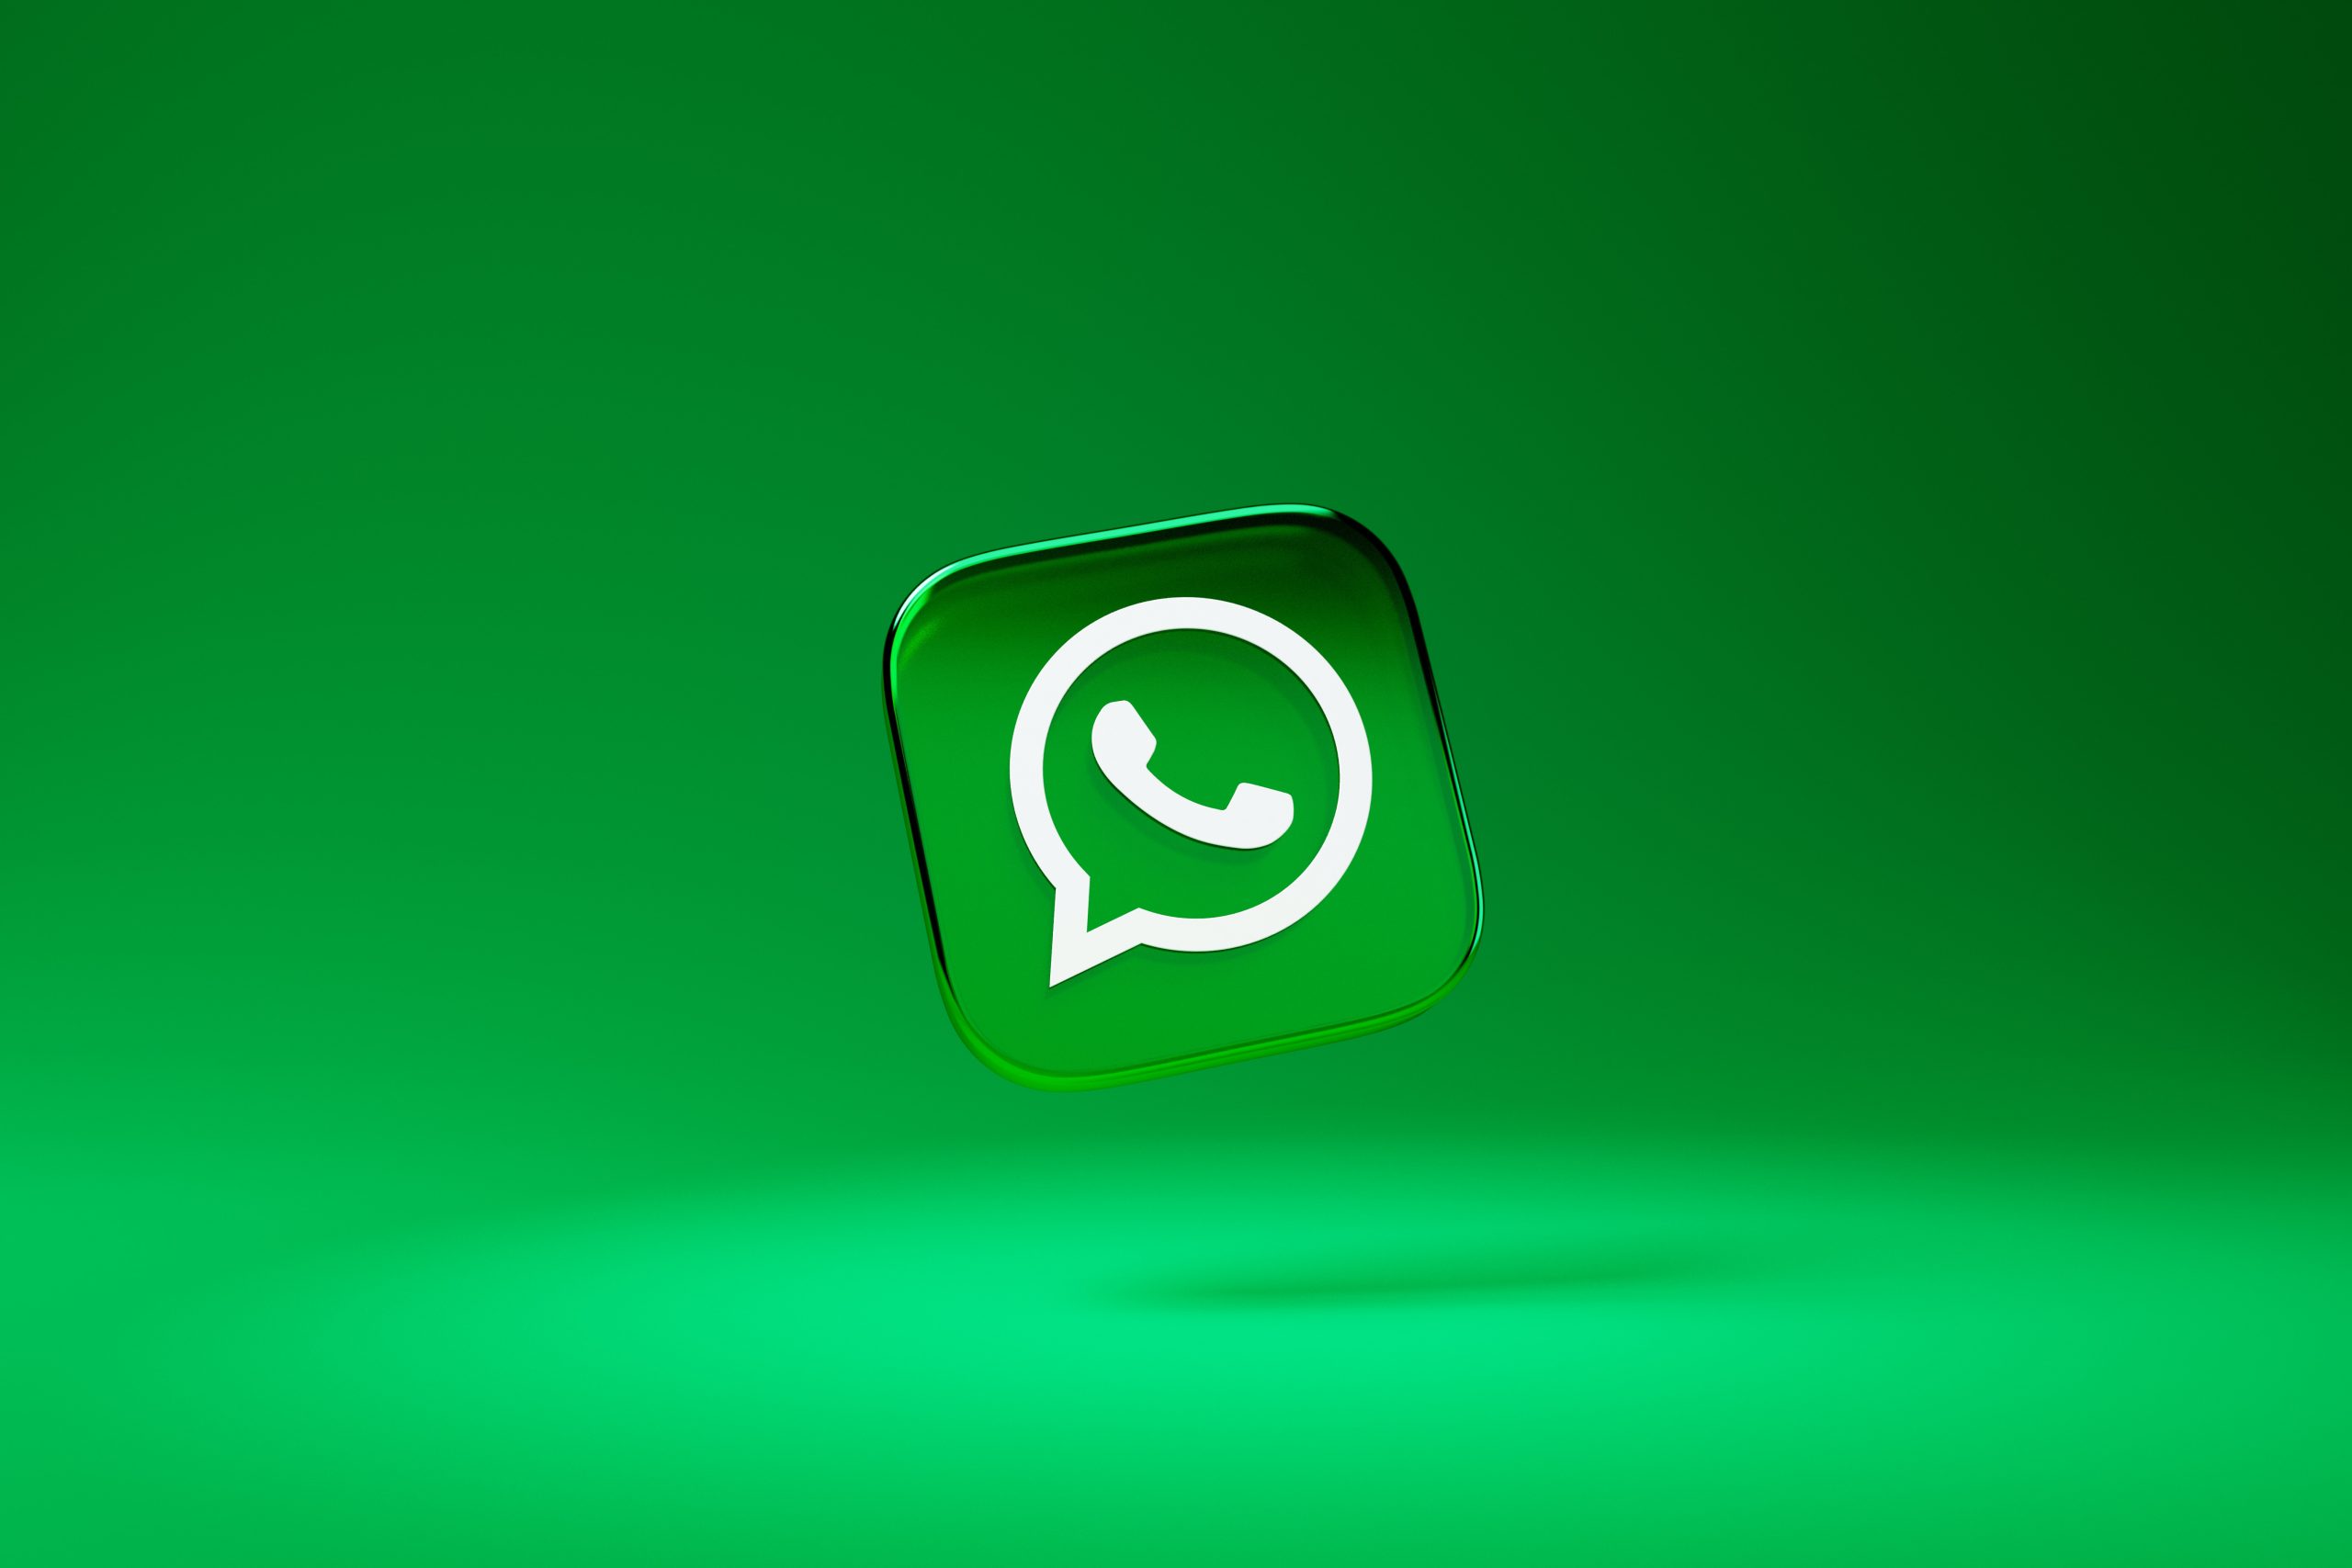 whatsapp-chat-ley-de-mercados-digitales